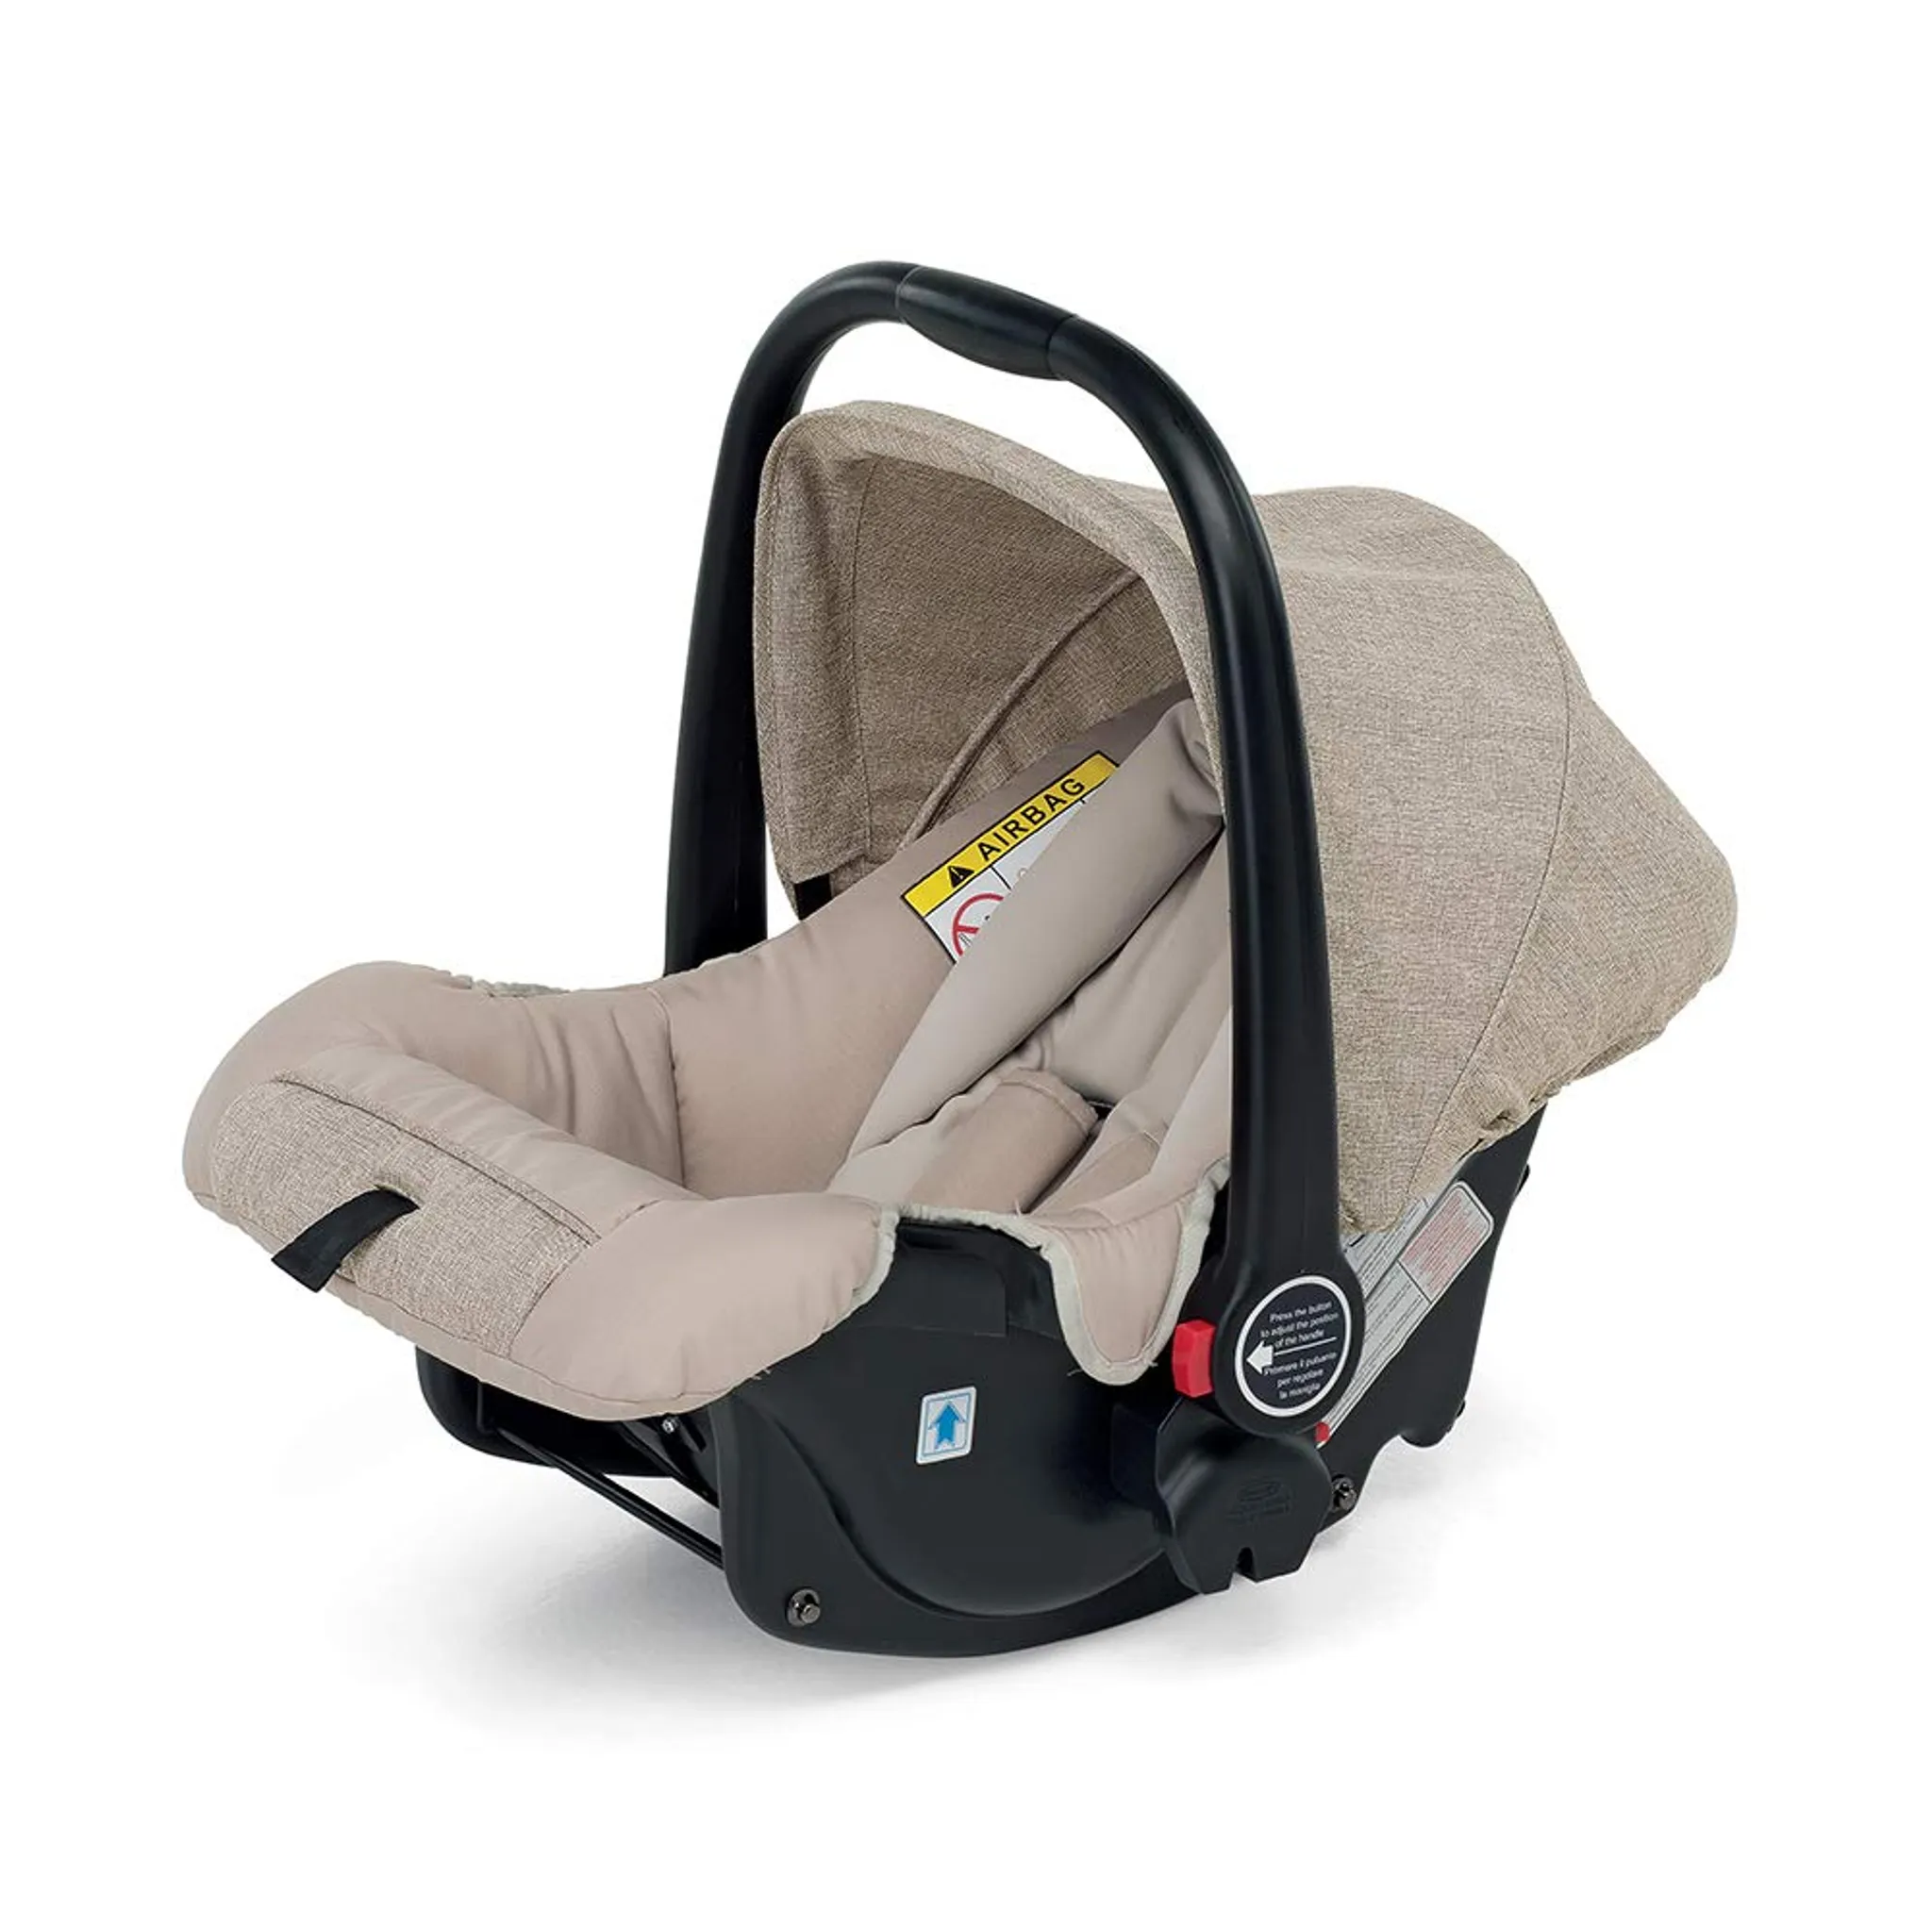 0+ Auto Babyschale Gruppe Kindersitz Sand